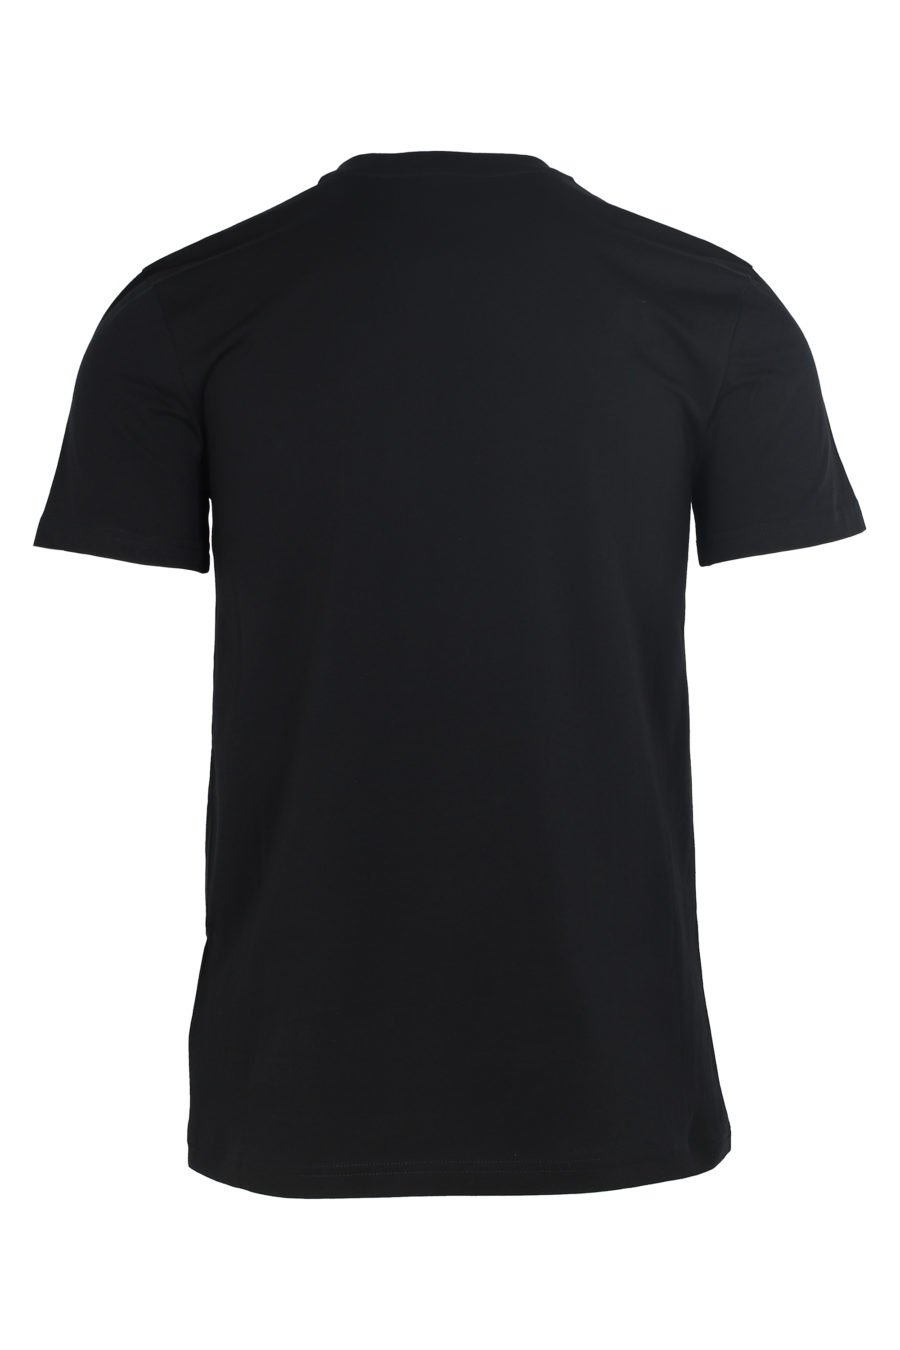 Camiseta negra con logo "Couture" - IMG 5997